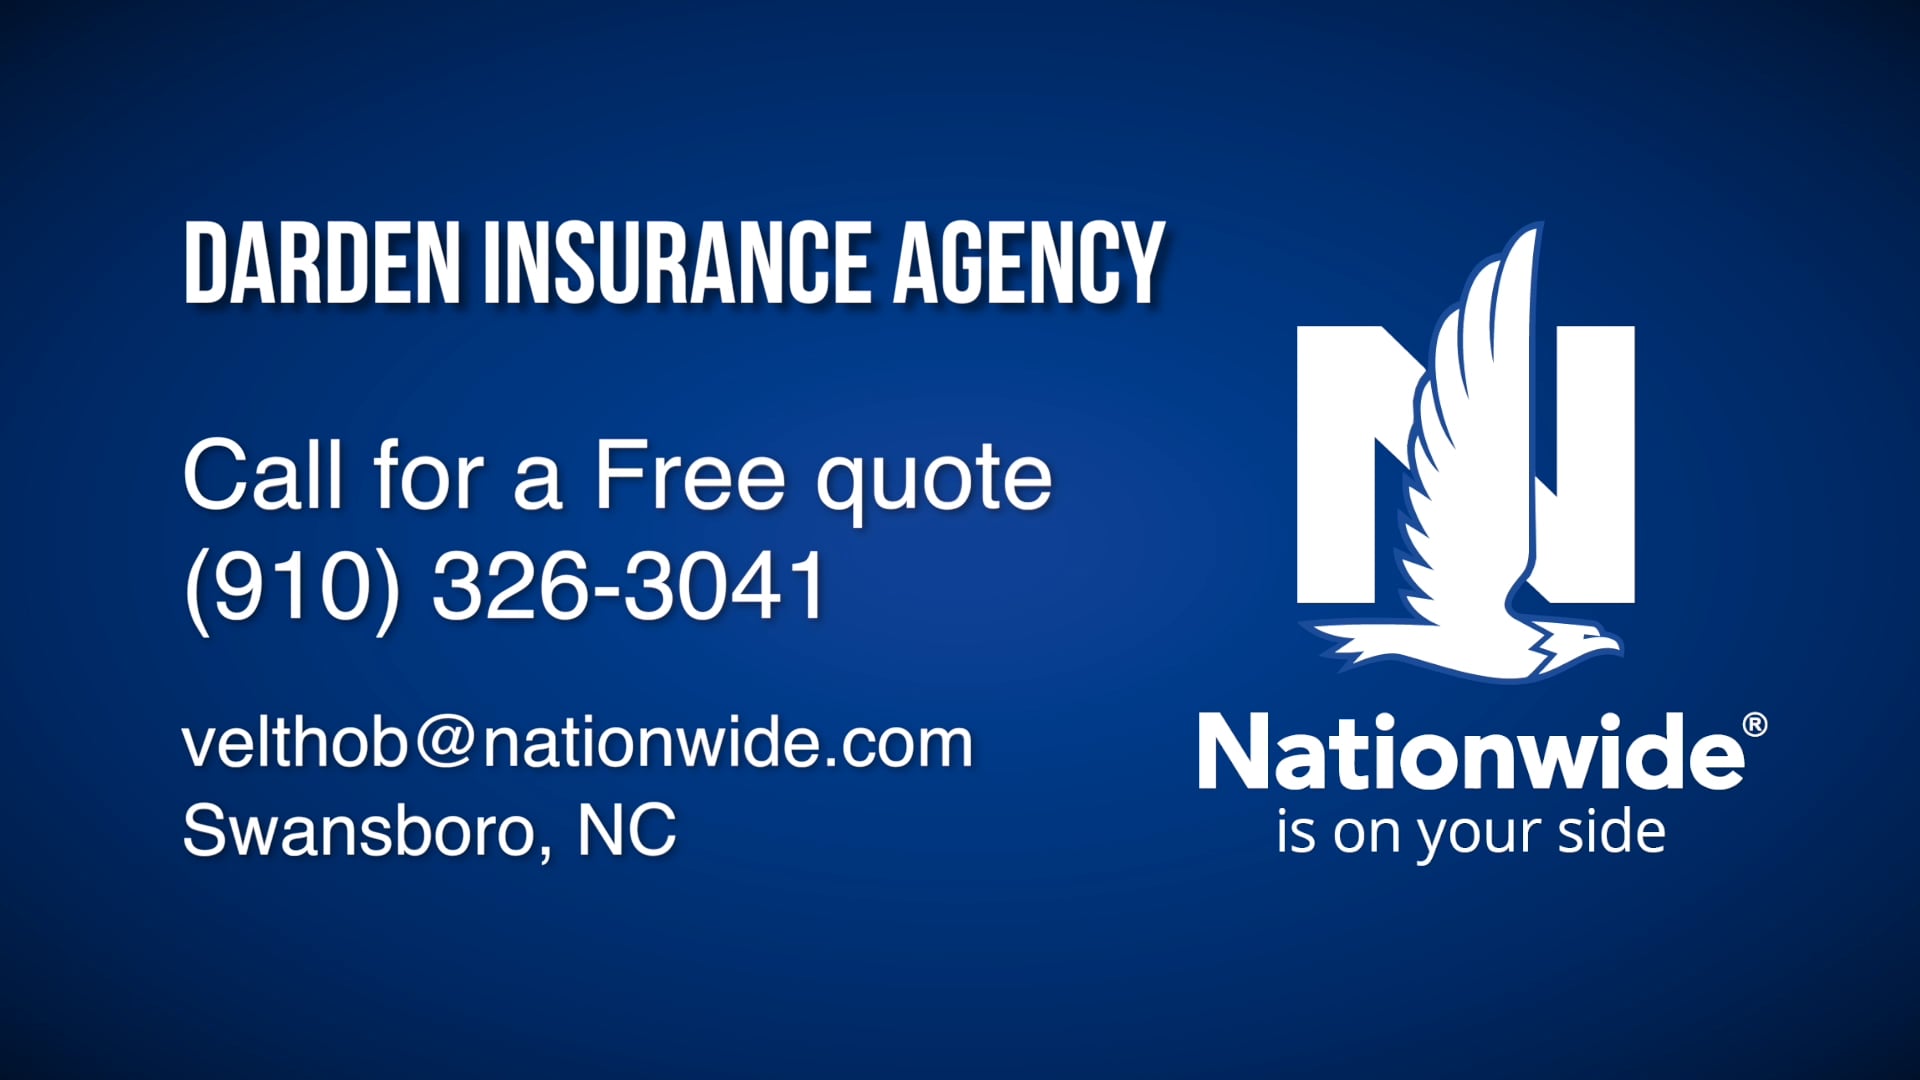 Nationwide Insurance Barbara Darden 2.25.17 on Vimeo